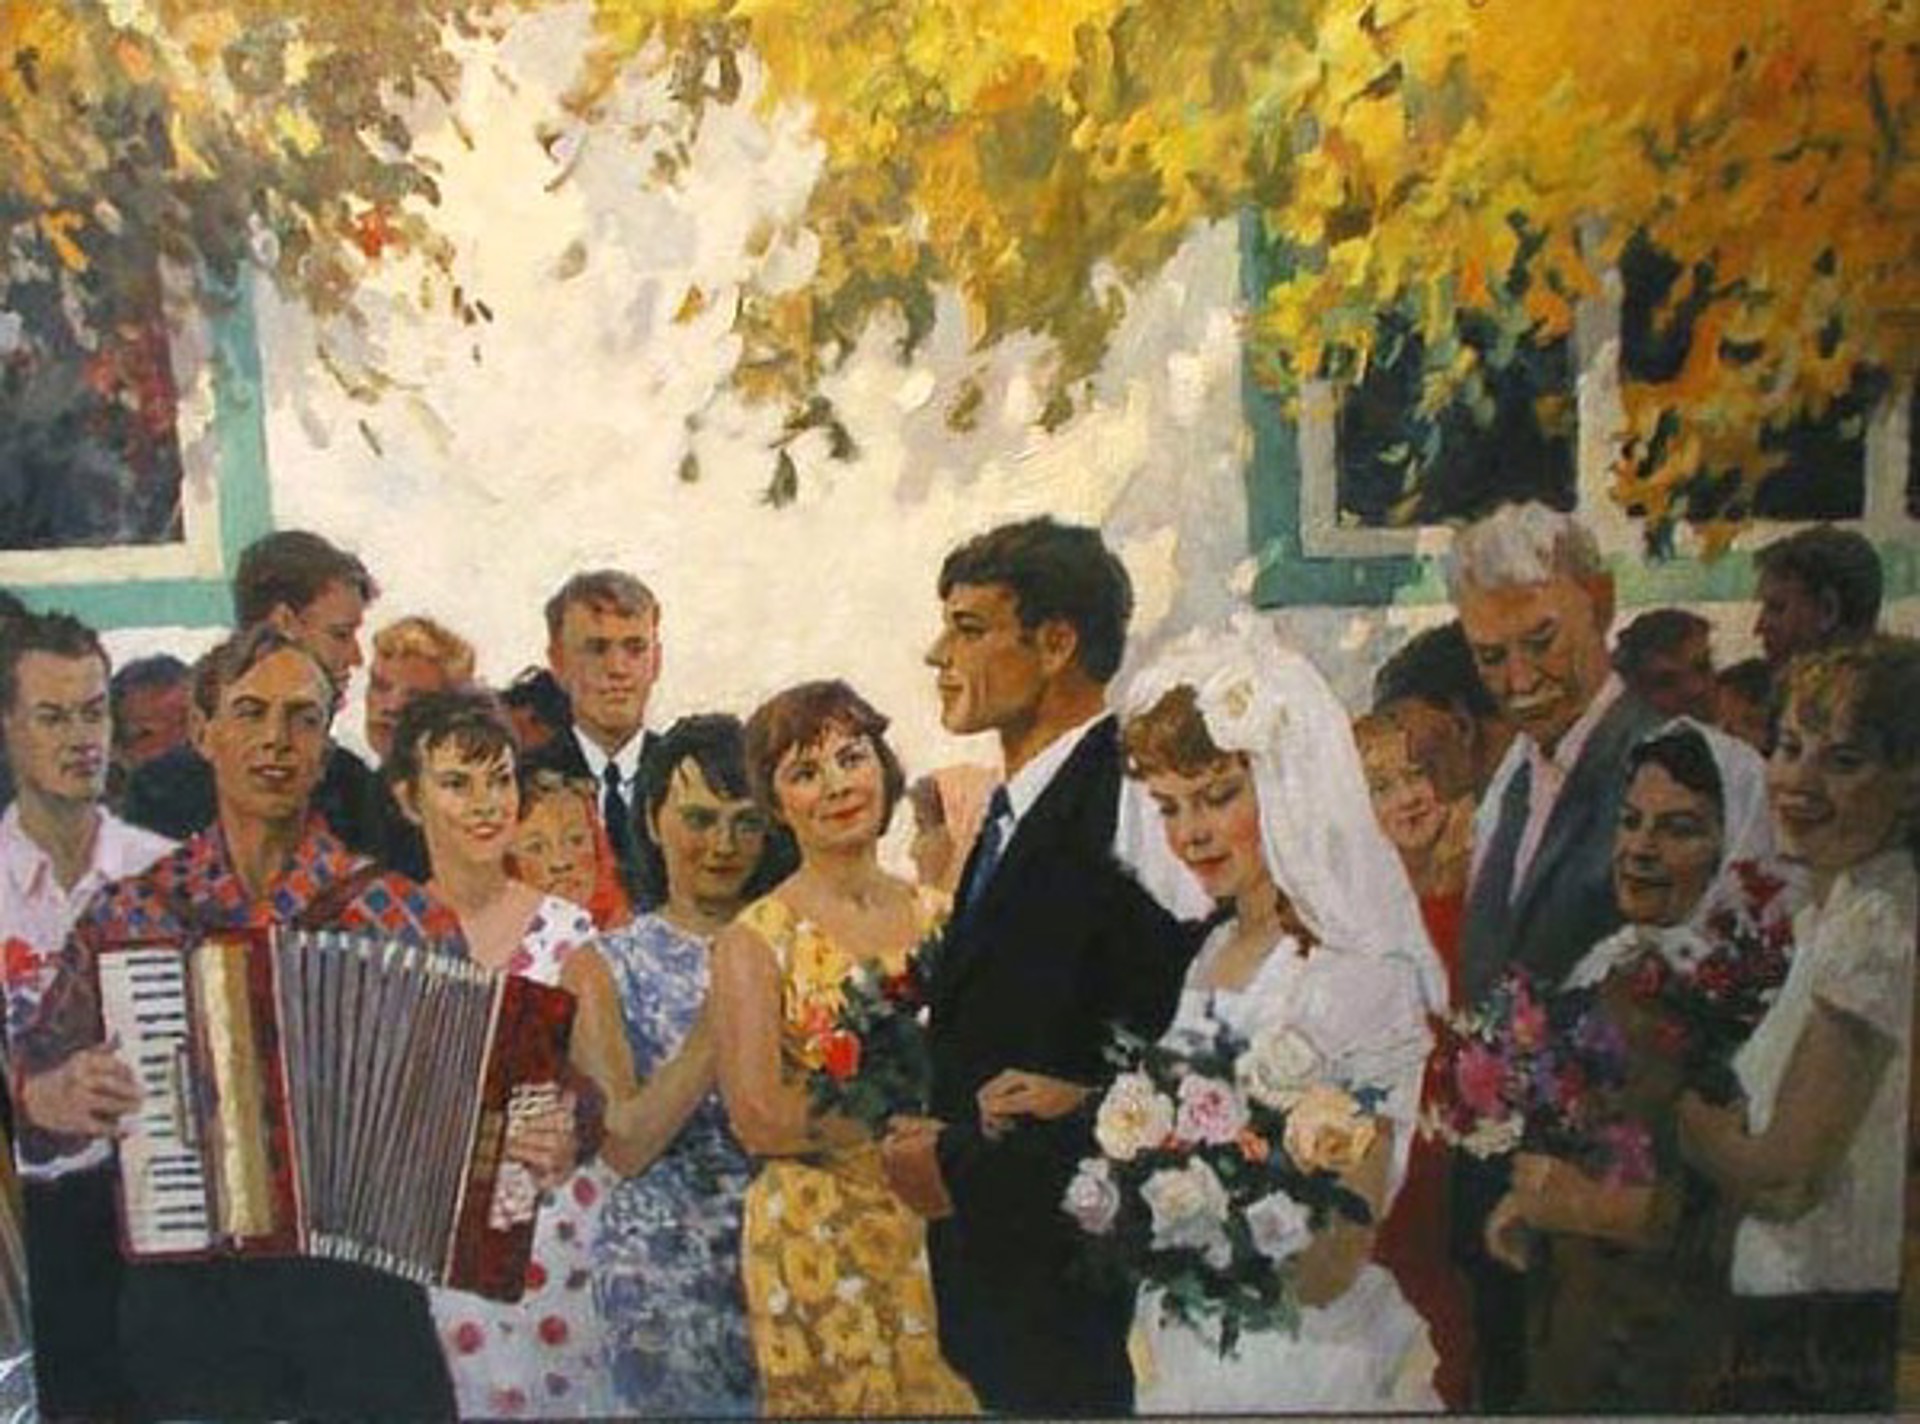 Wedding in Odessa by Nikolai Ivanov